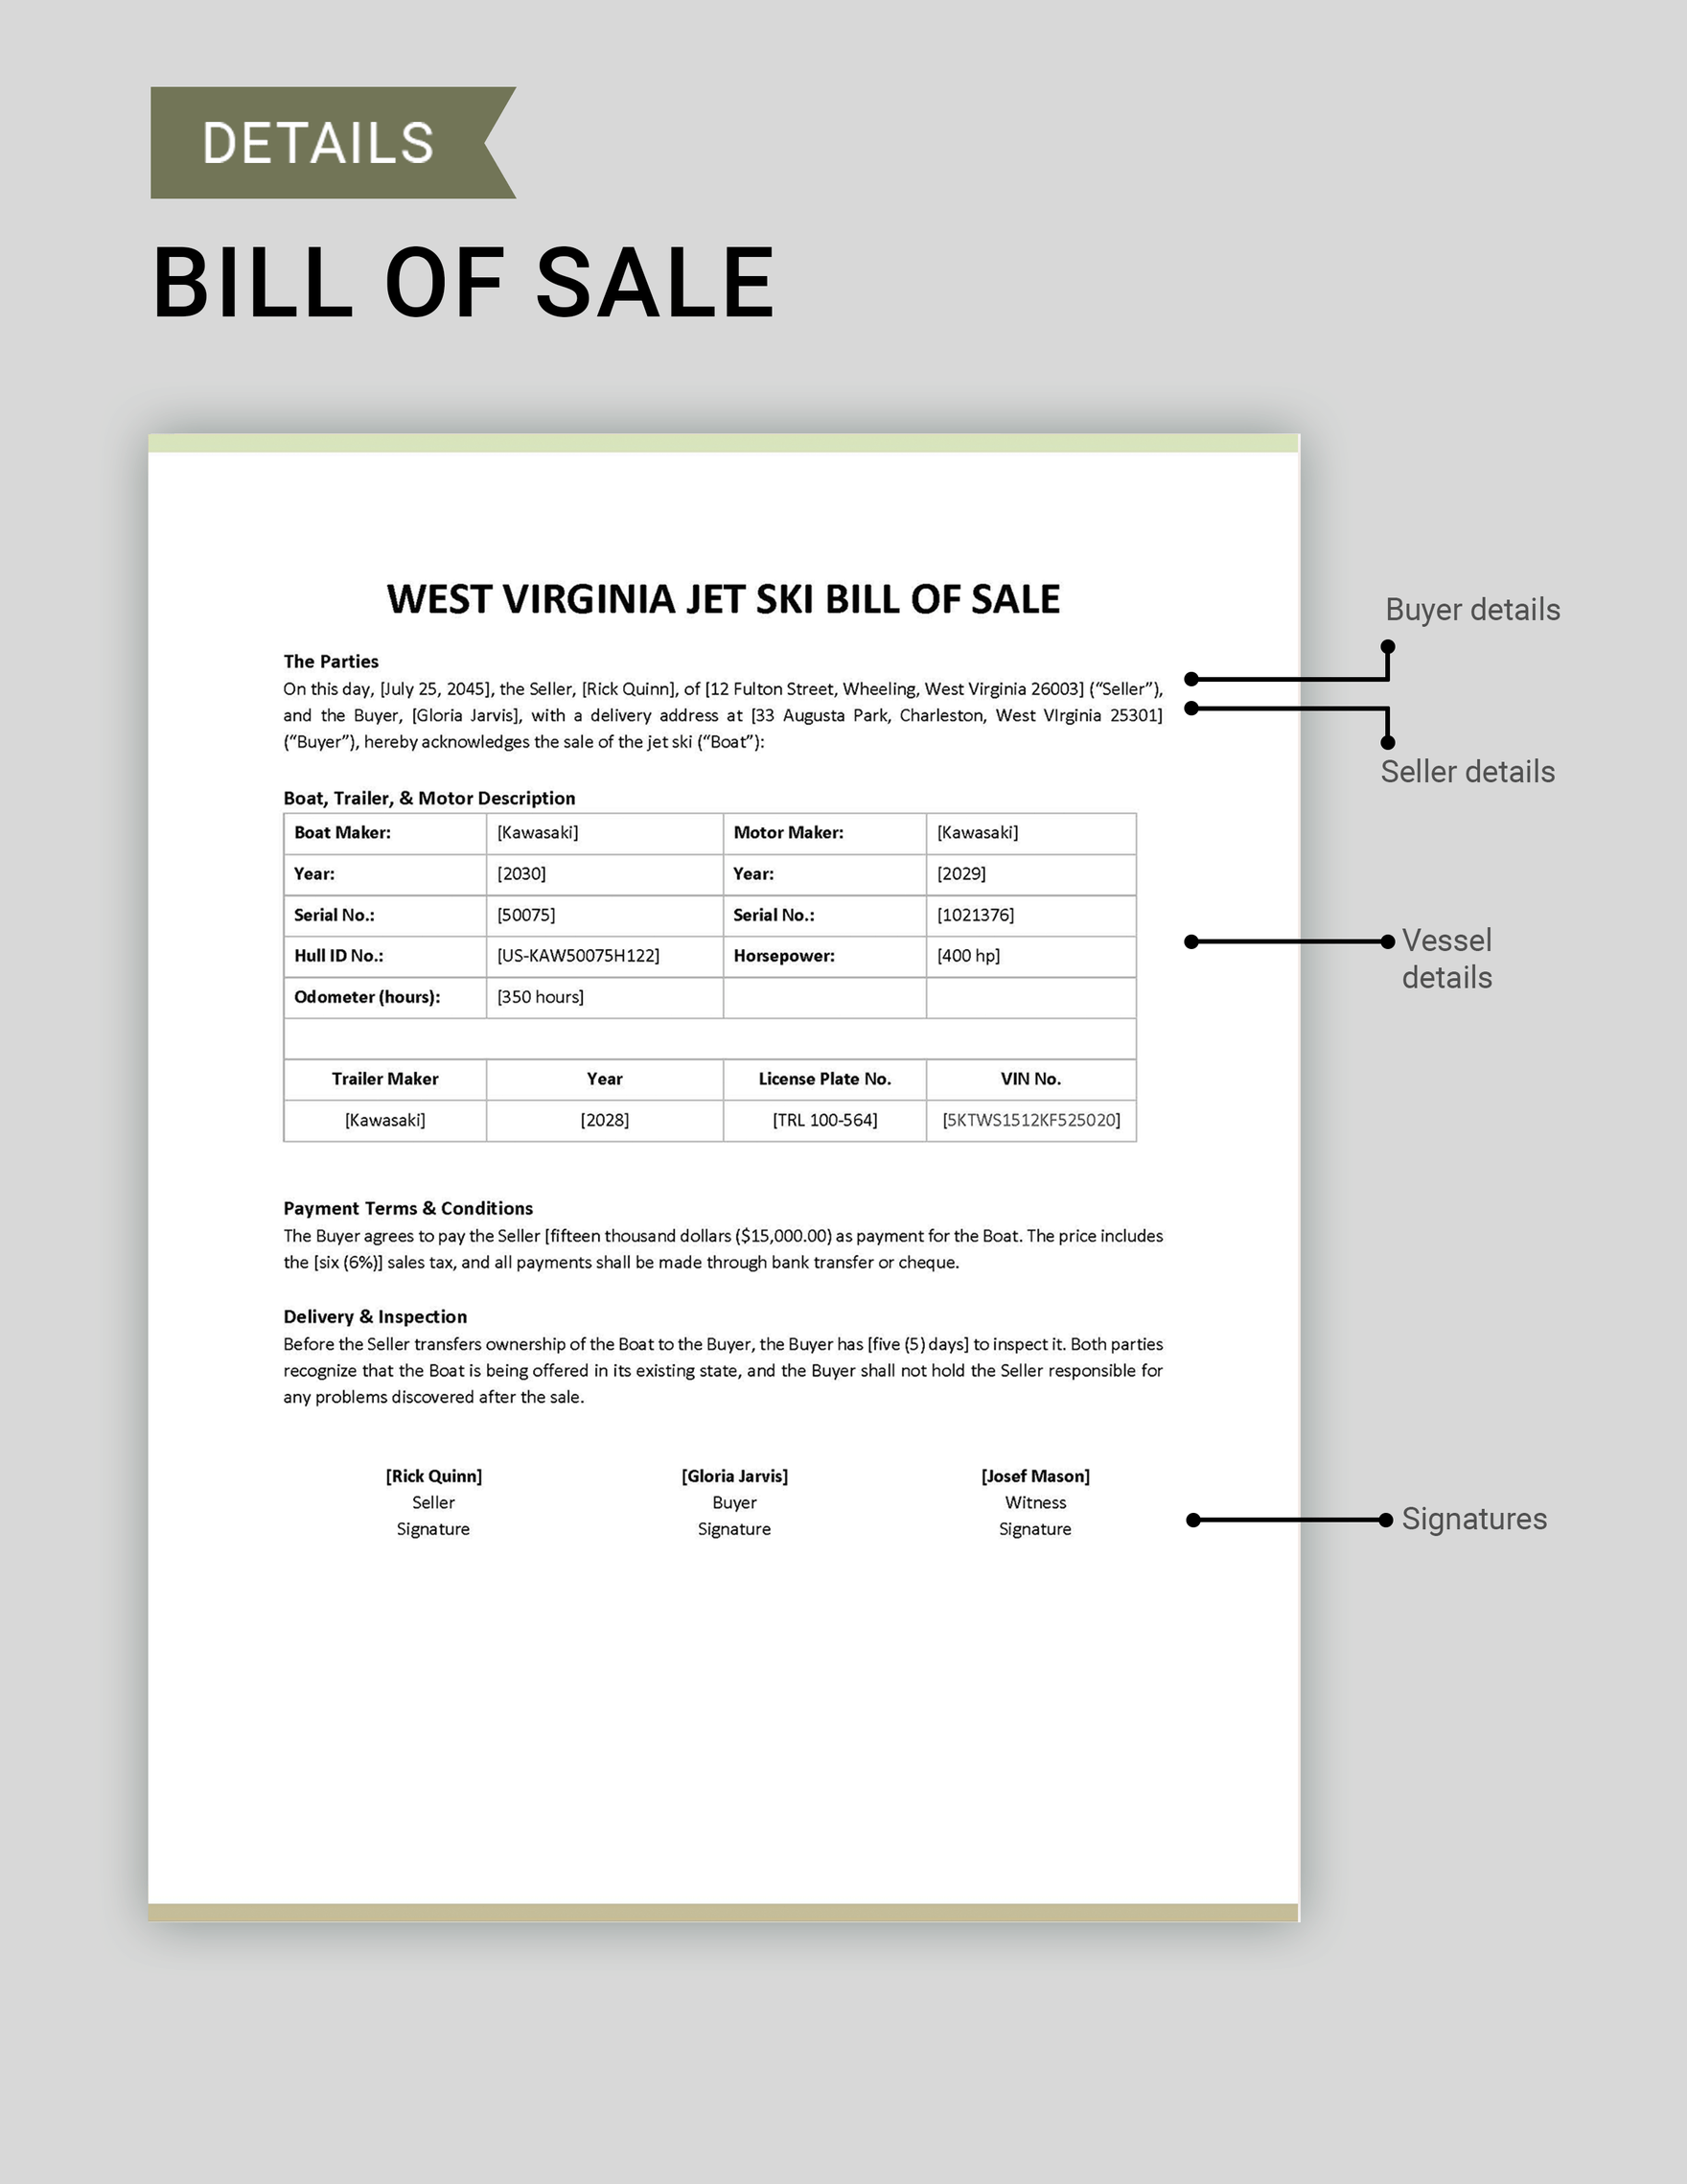 West Virginia Jet Ski Bill of Sale Template